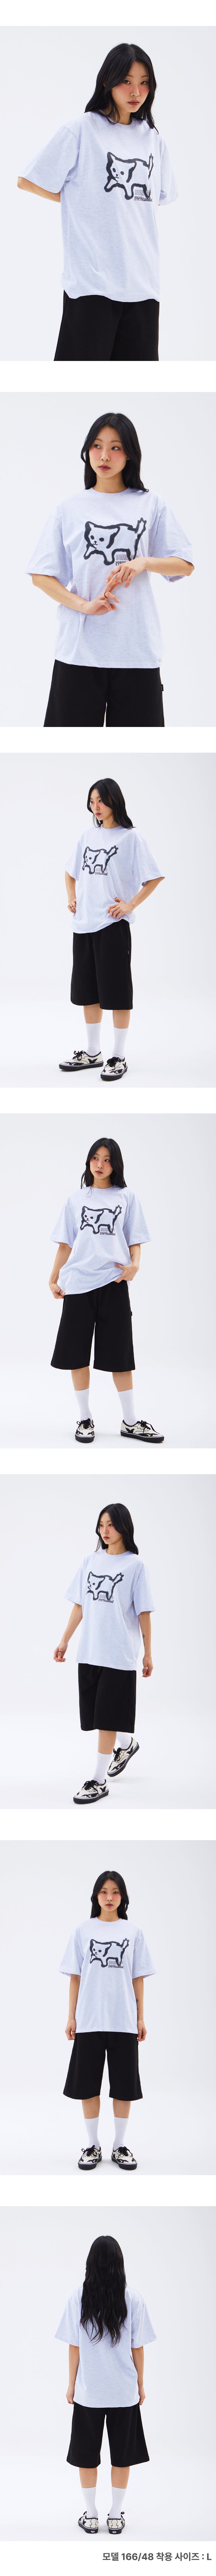 BIG CAT Cool Cotton Overfit Short Sleeves(SISSTD-0050)